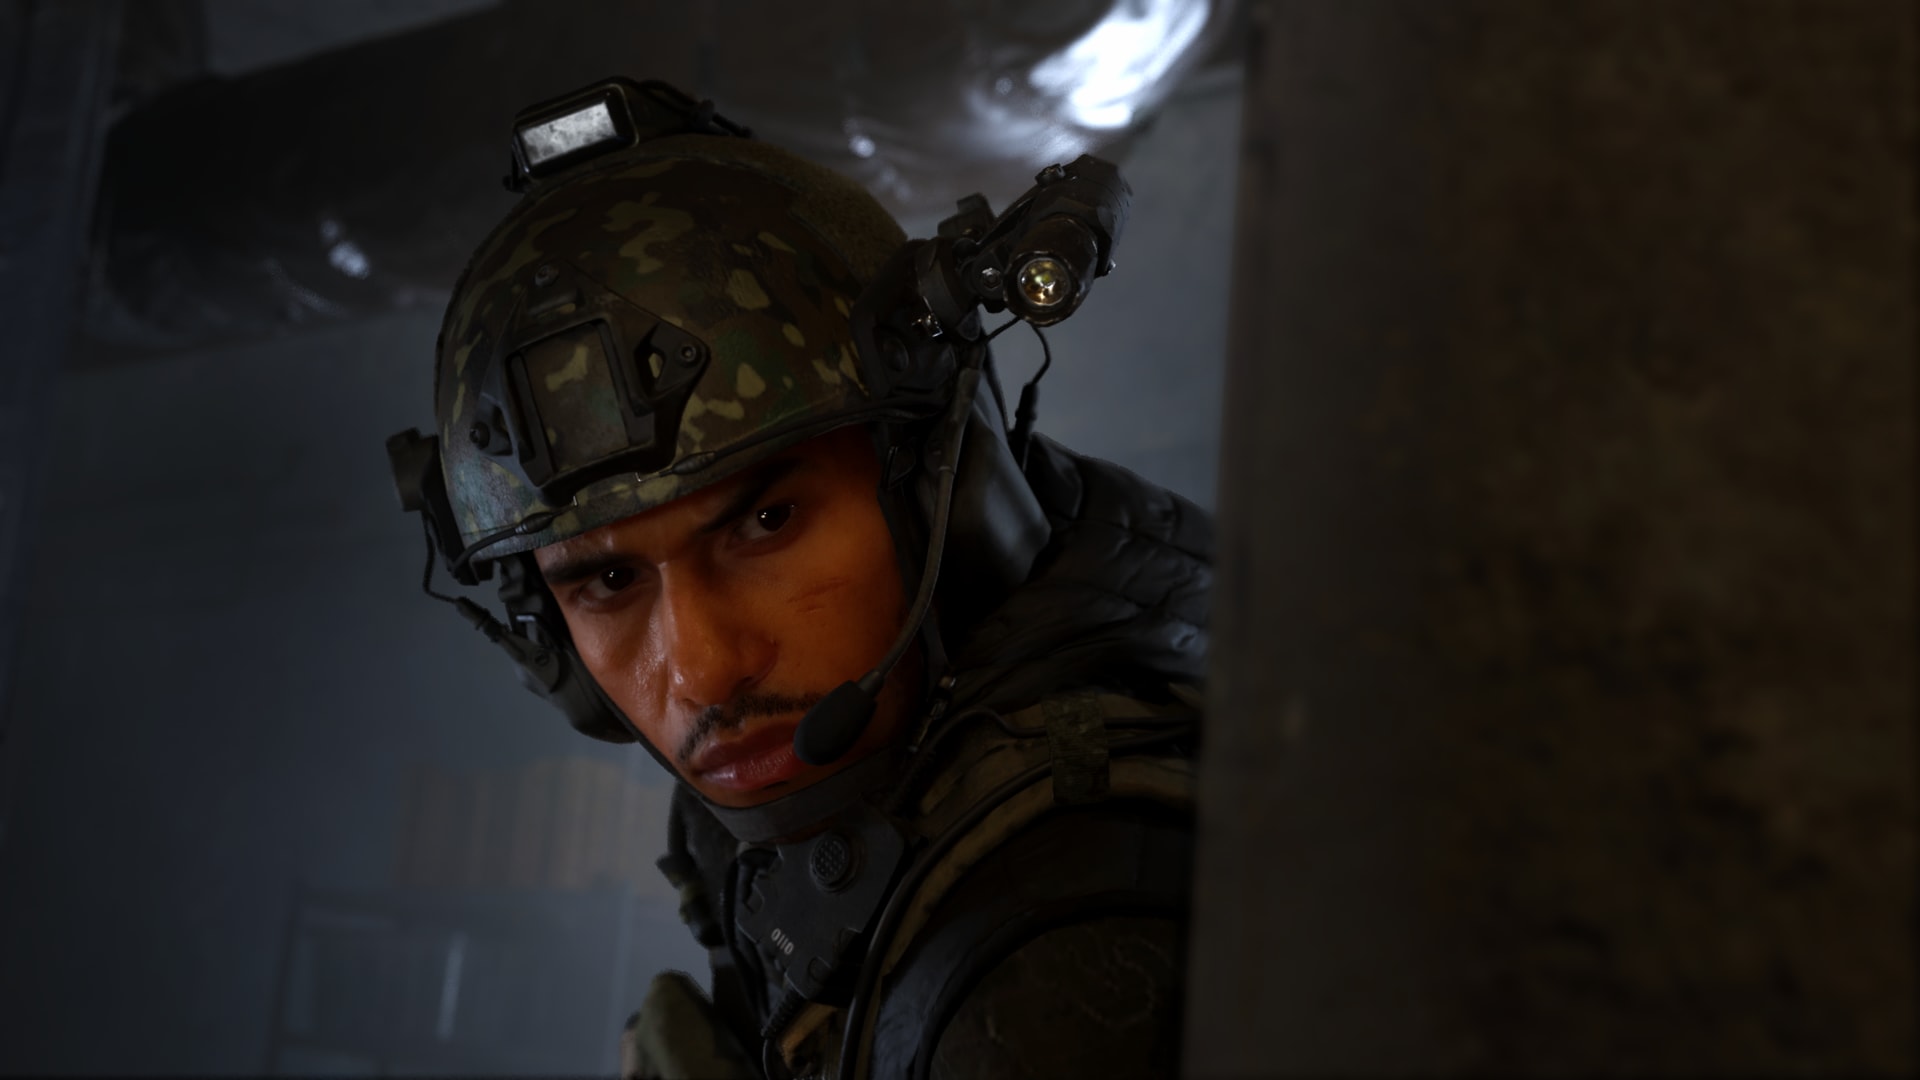 LIVE 2.0 GAFAS Gamer!! - Baja Confirmada en Overwatch - Modern Warfare 3  